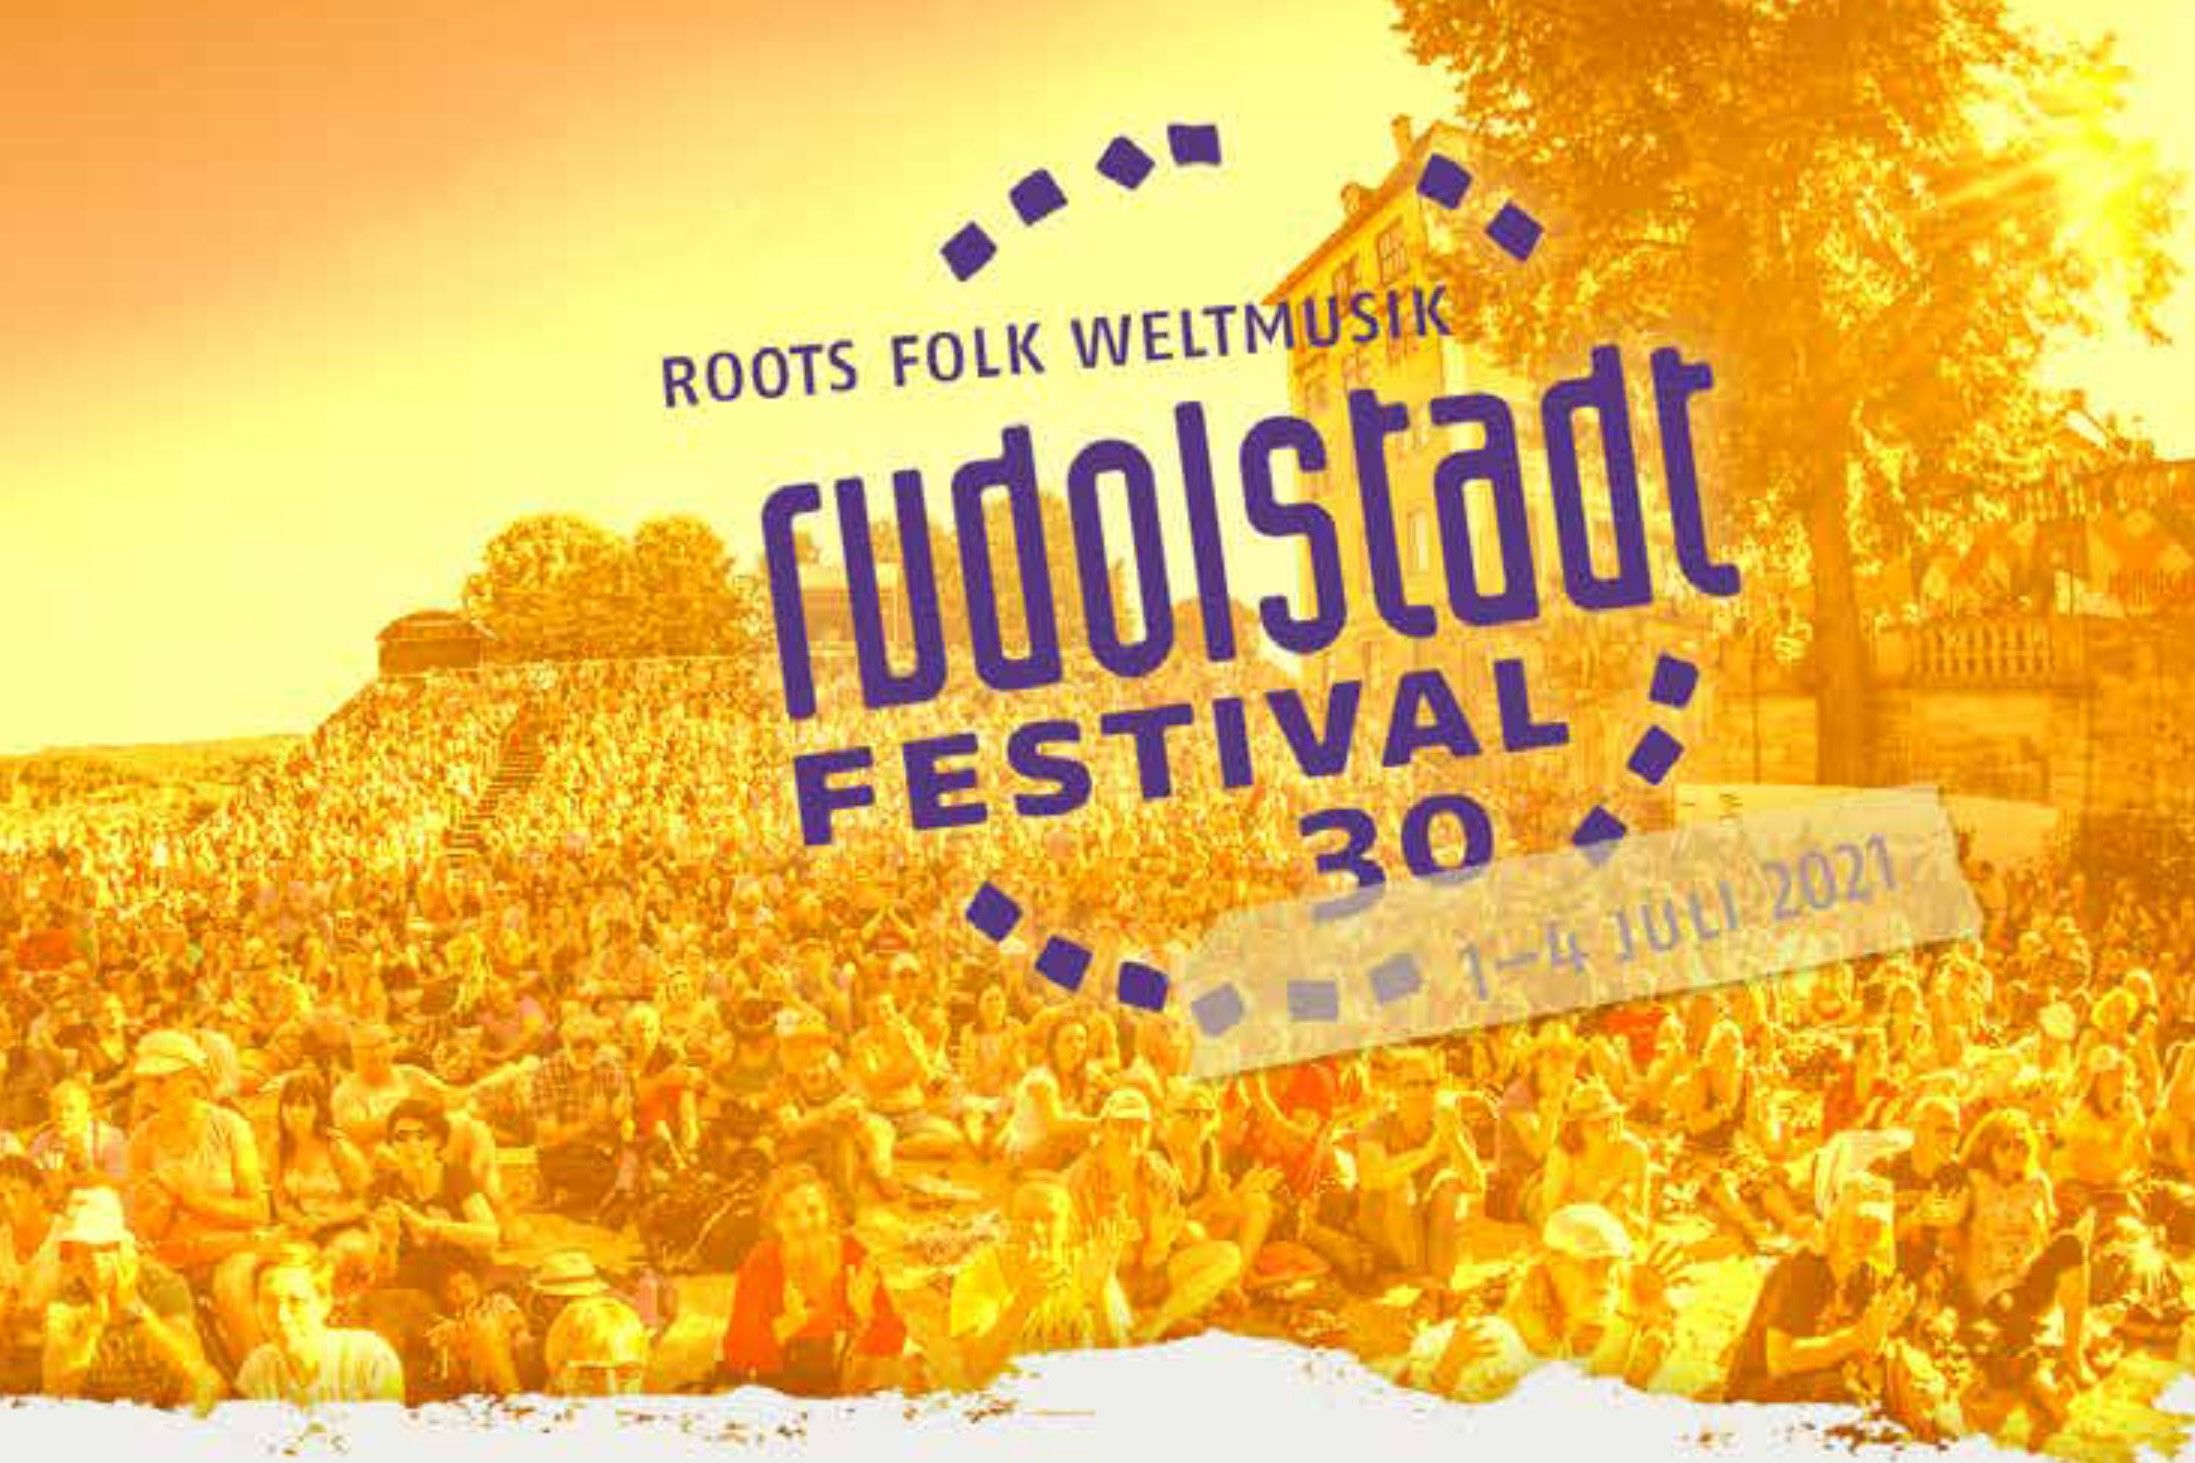 Einzelkonzerte statt Rudolstadt Festival